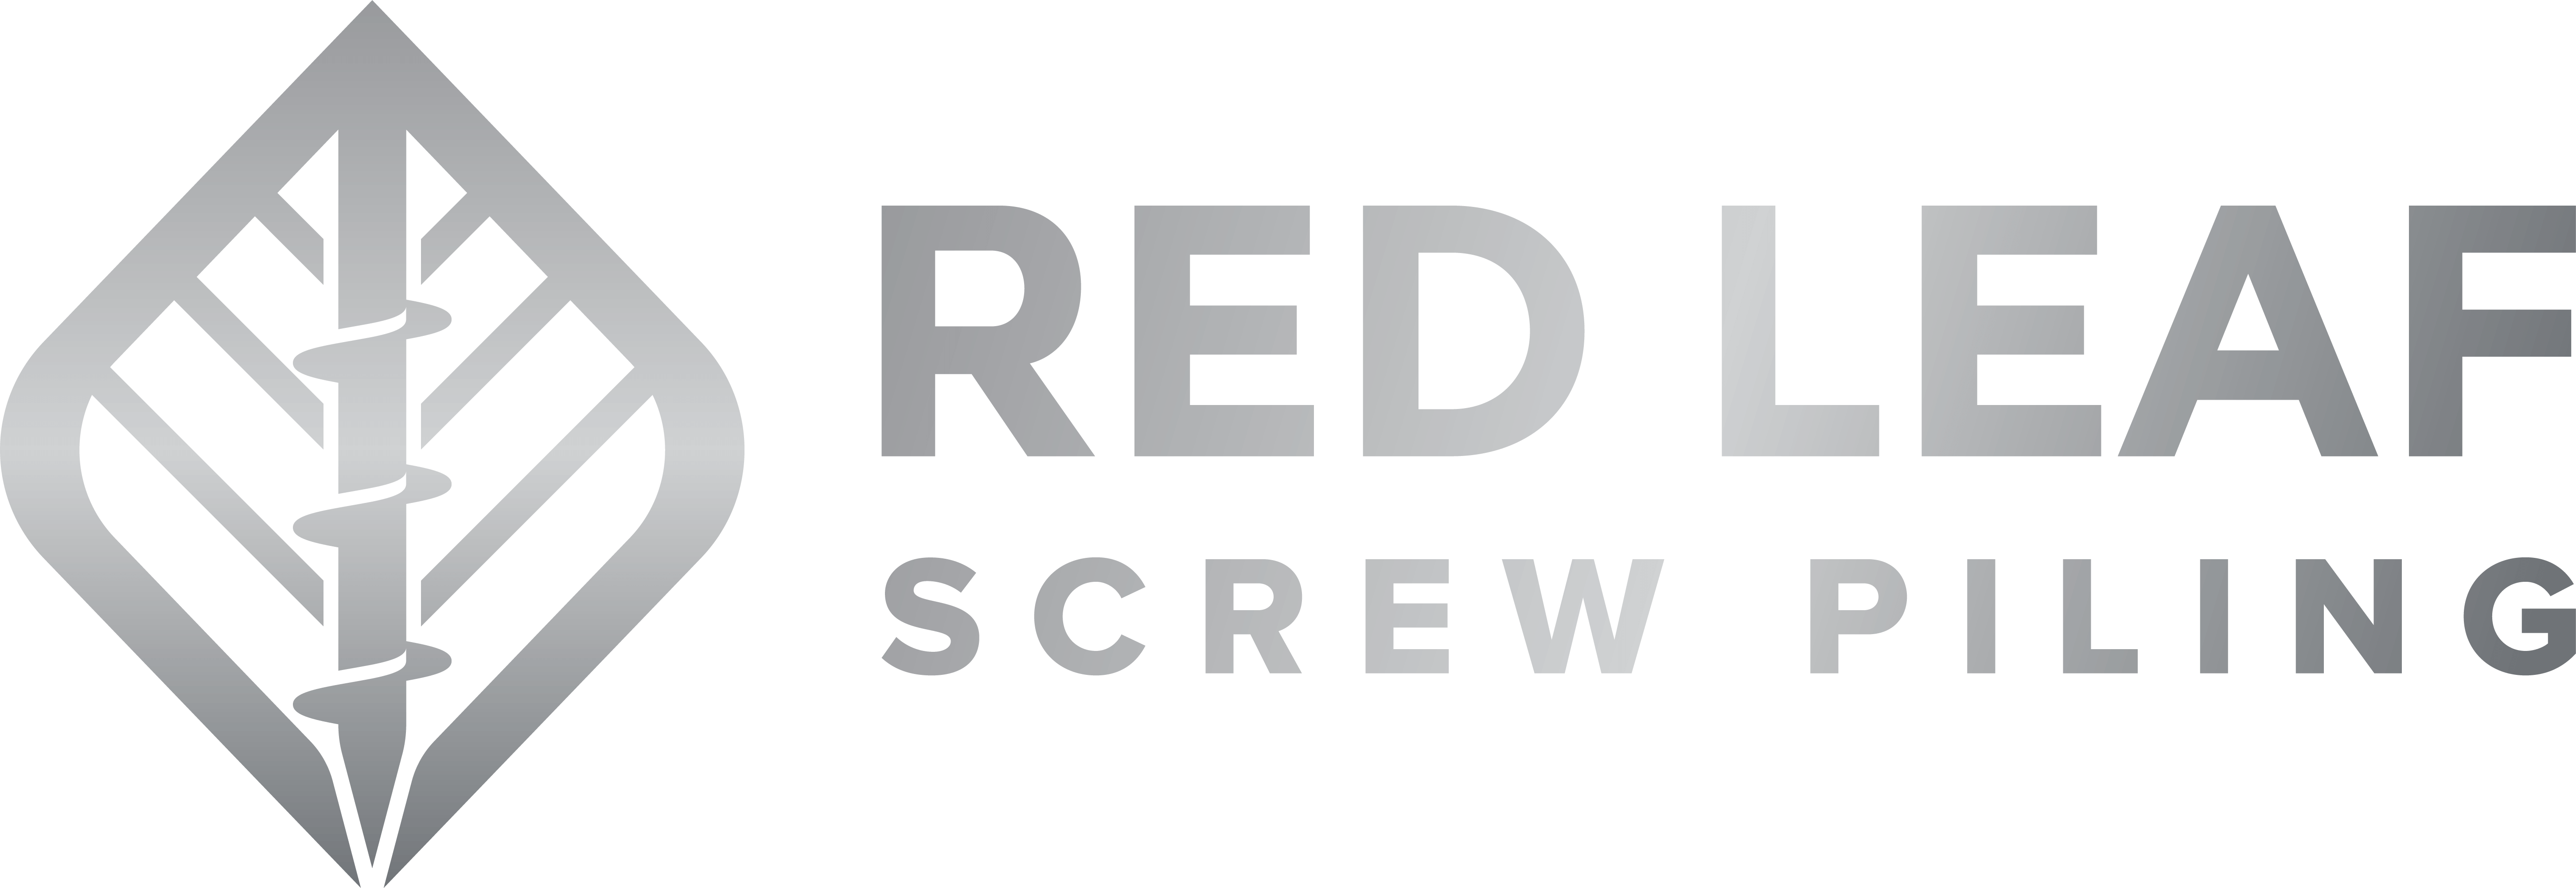 Red Leaf Screw Piling Logo Horizontal